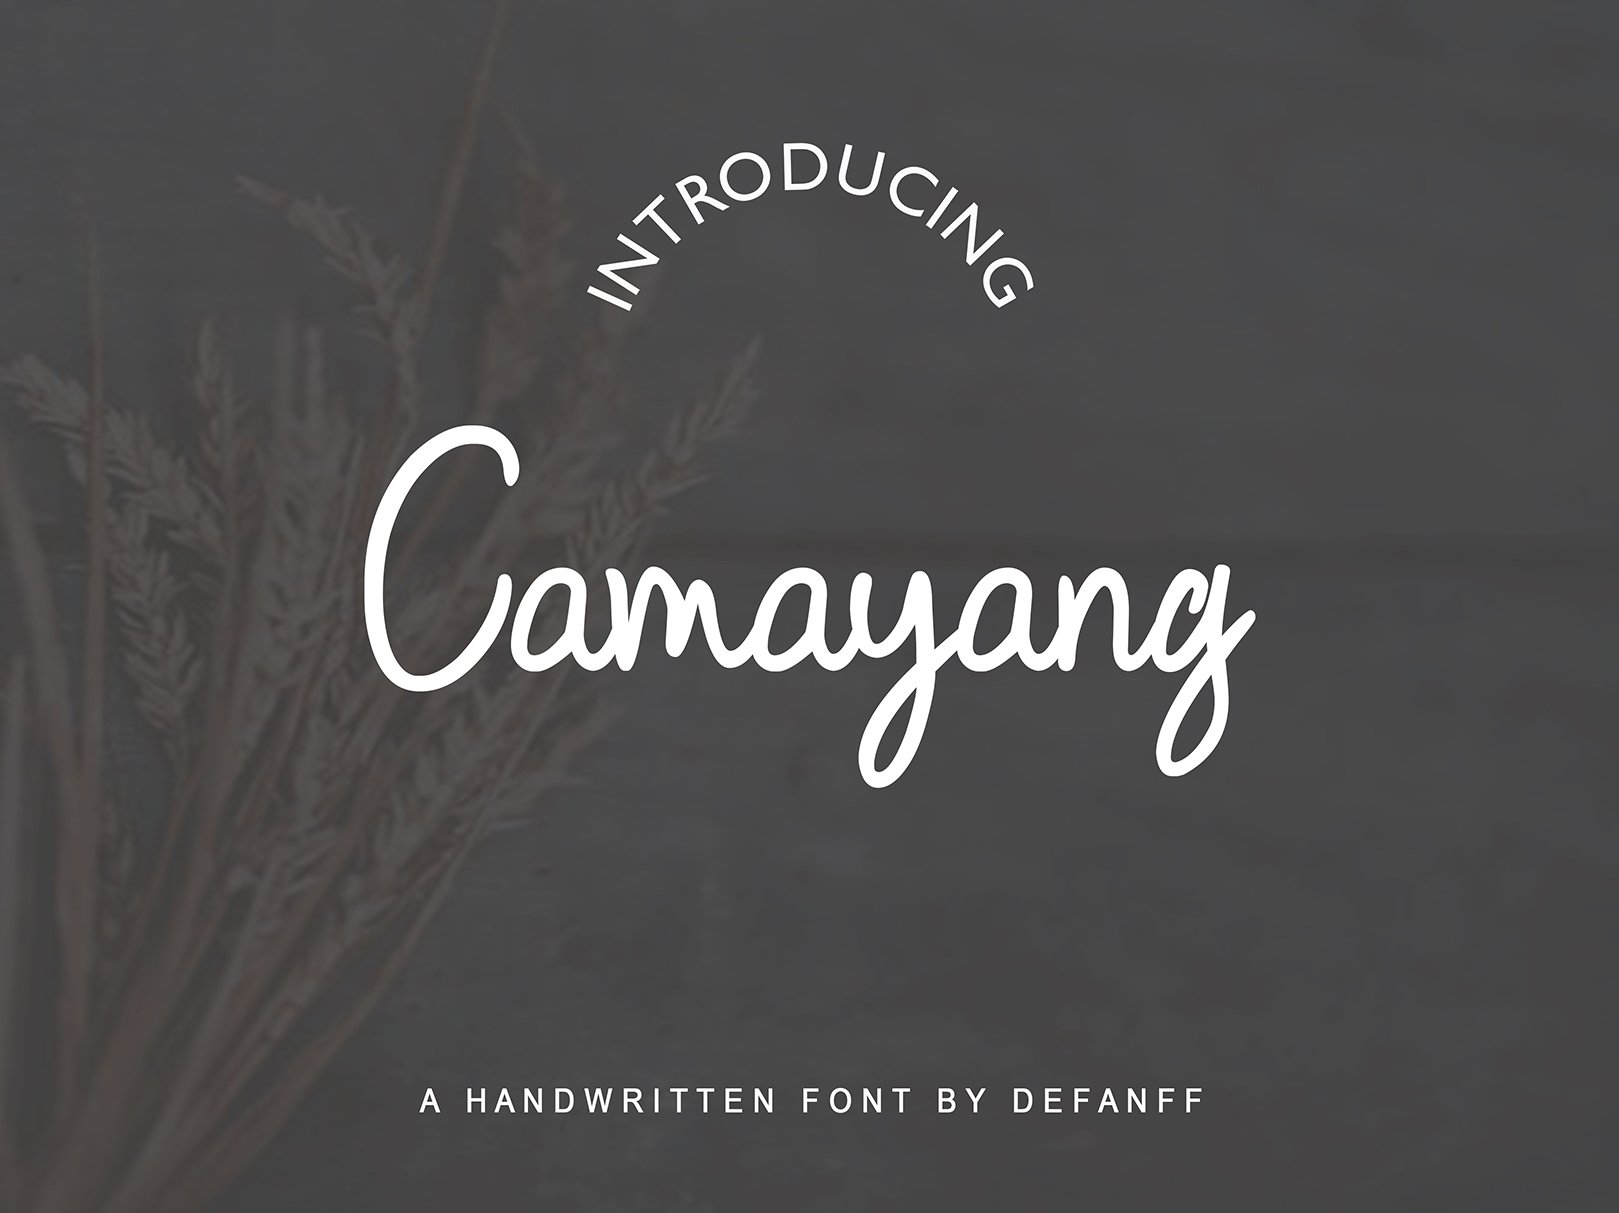 Camayang Handwritten Font cover image.